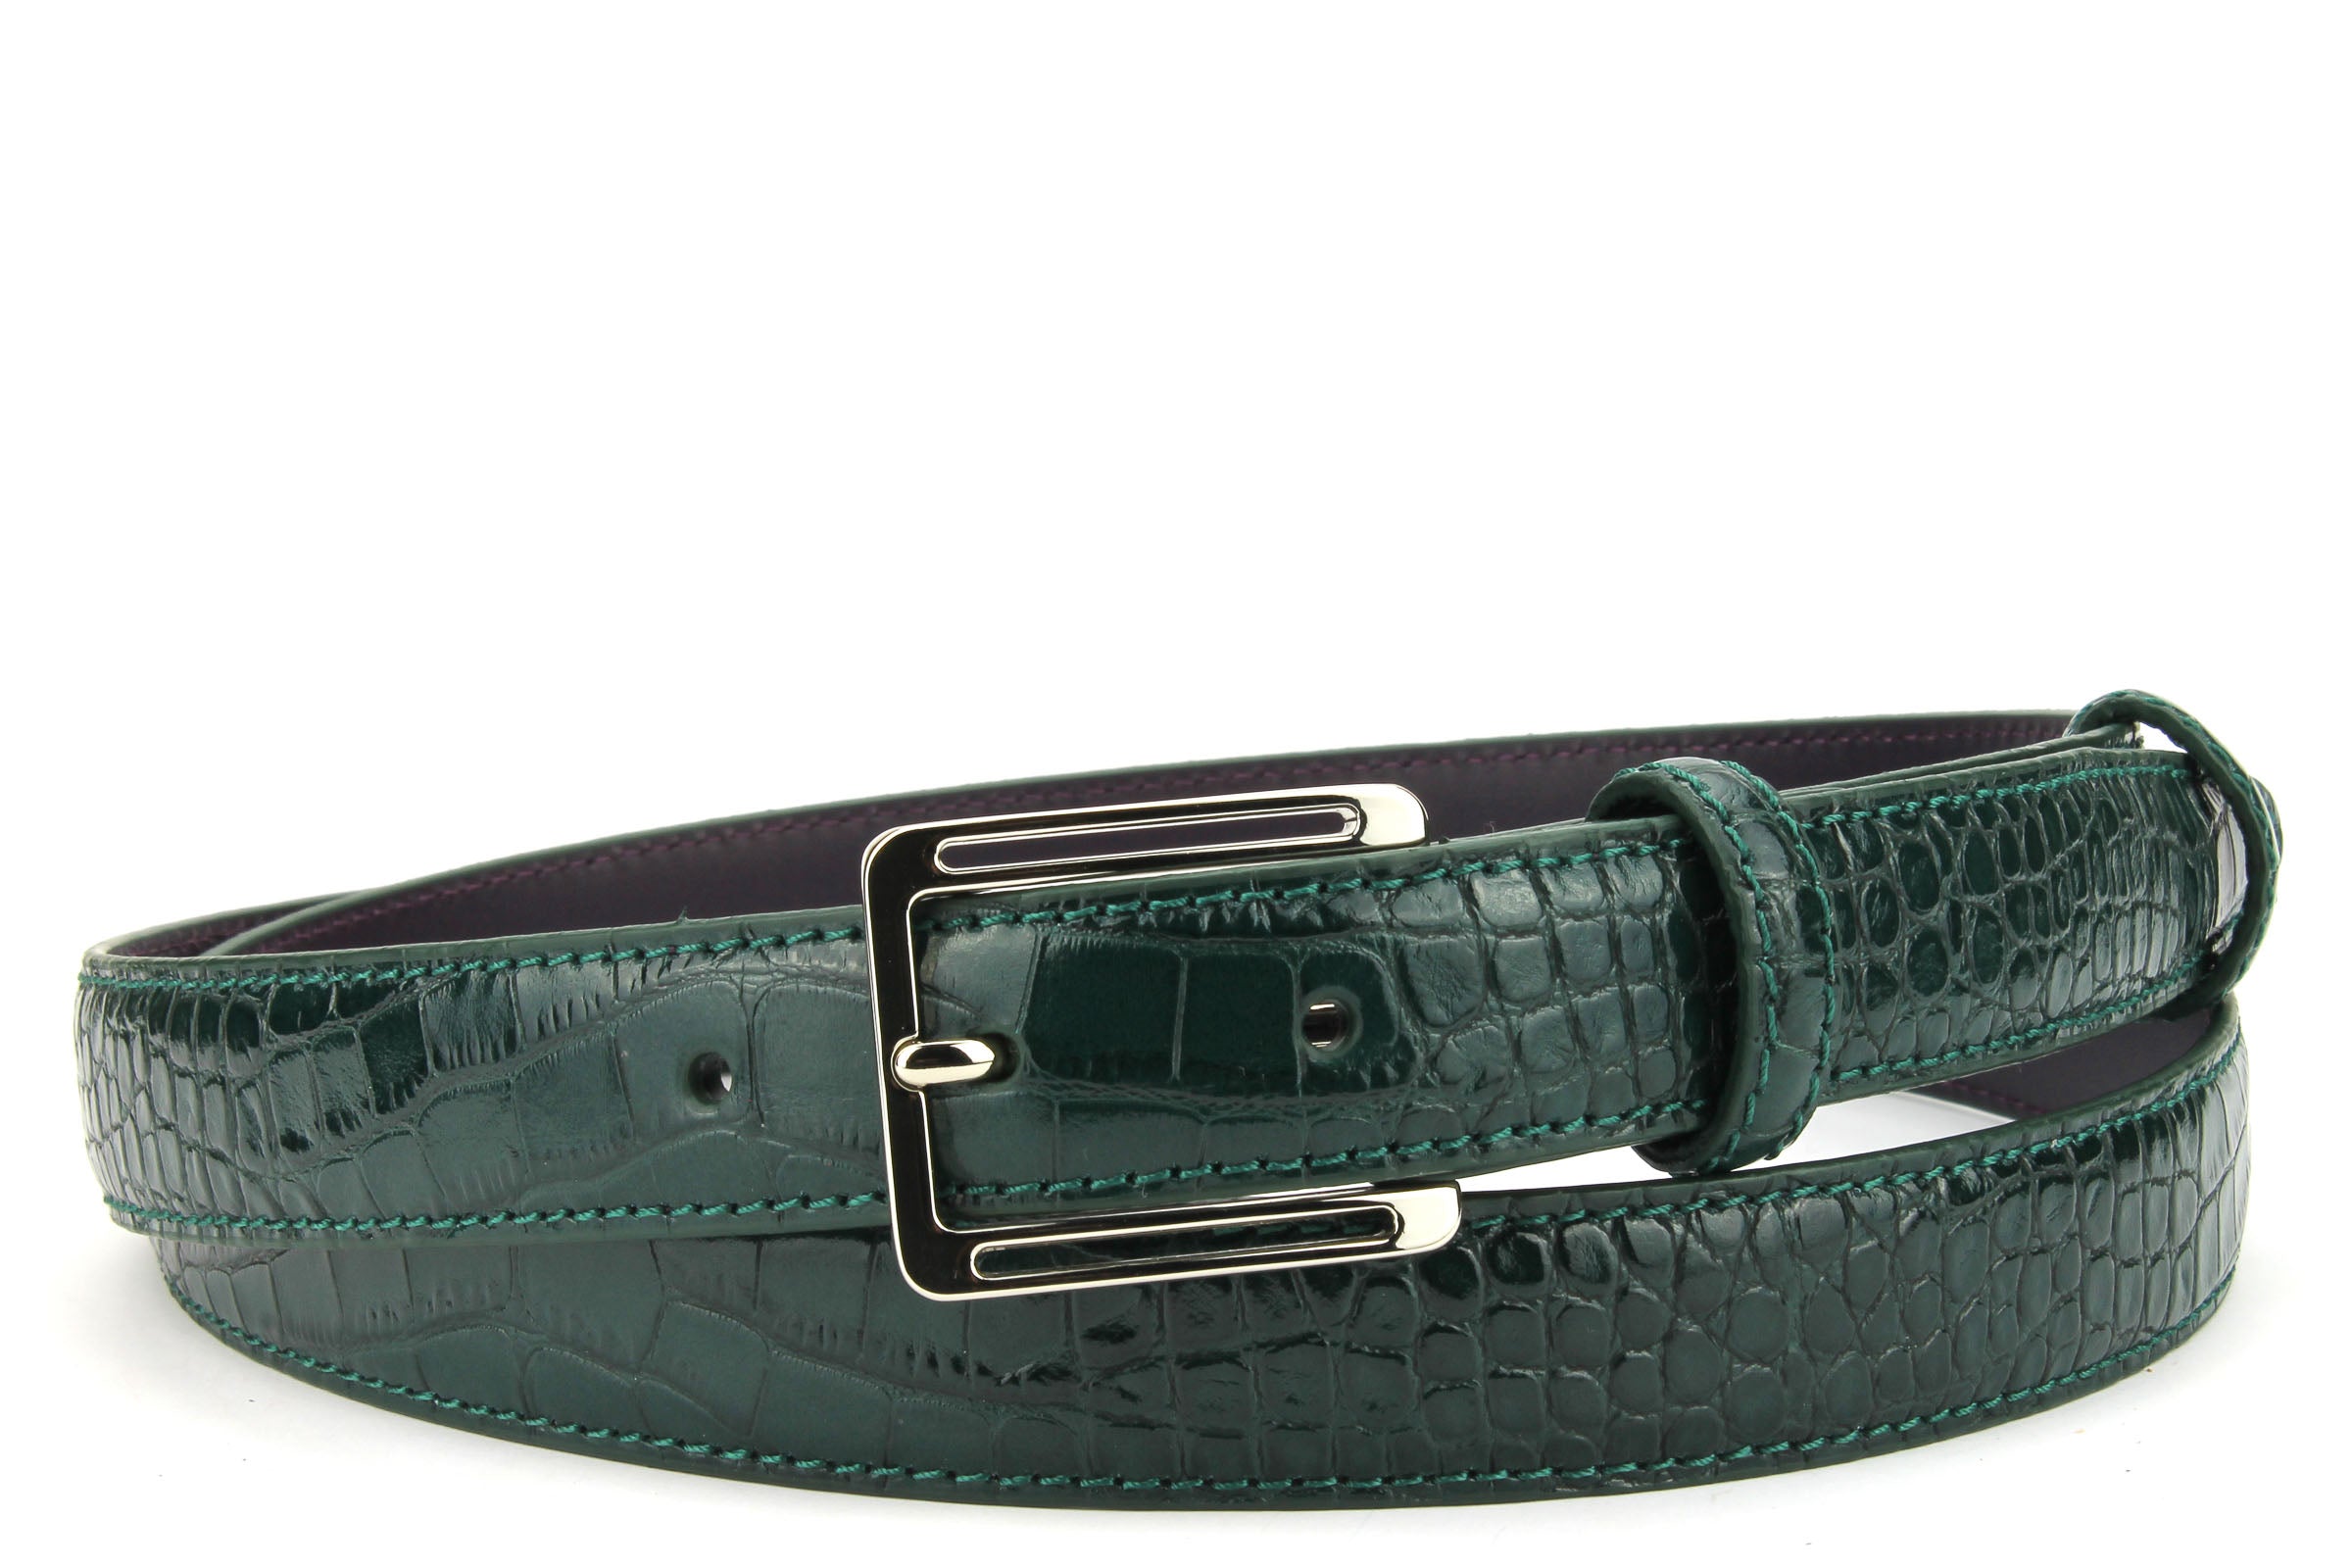 Skinny dark green mock croc belt with 